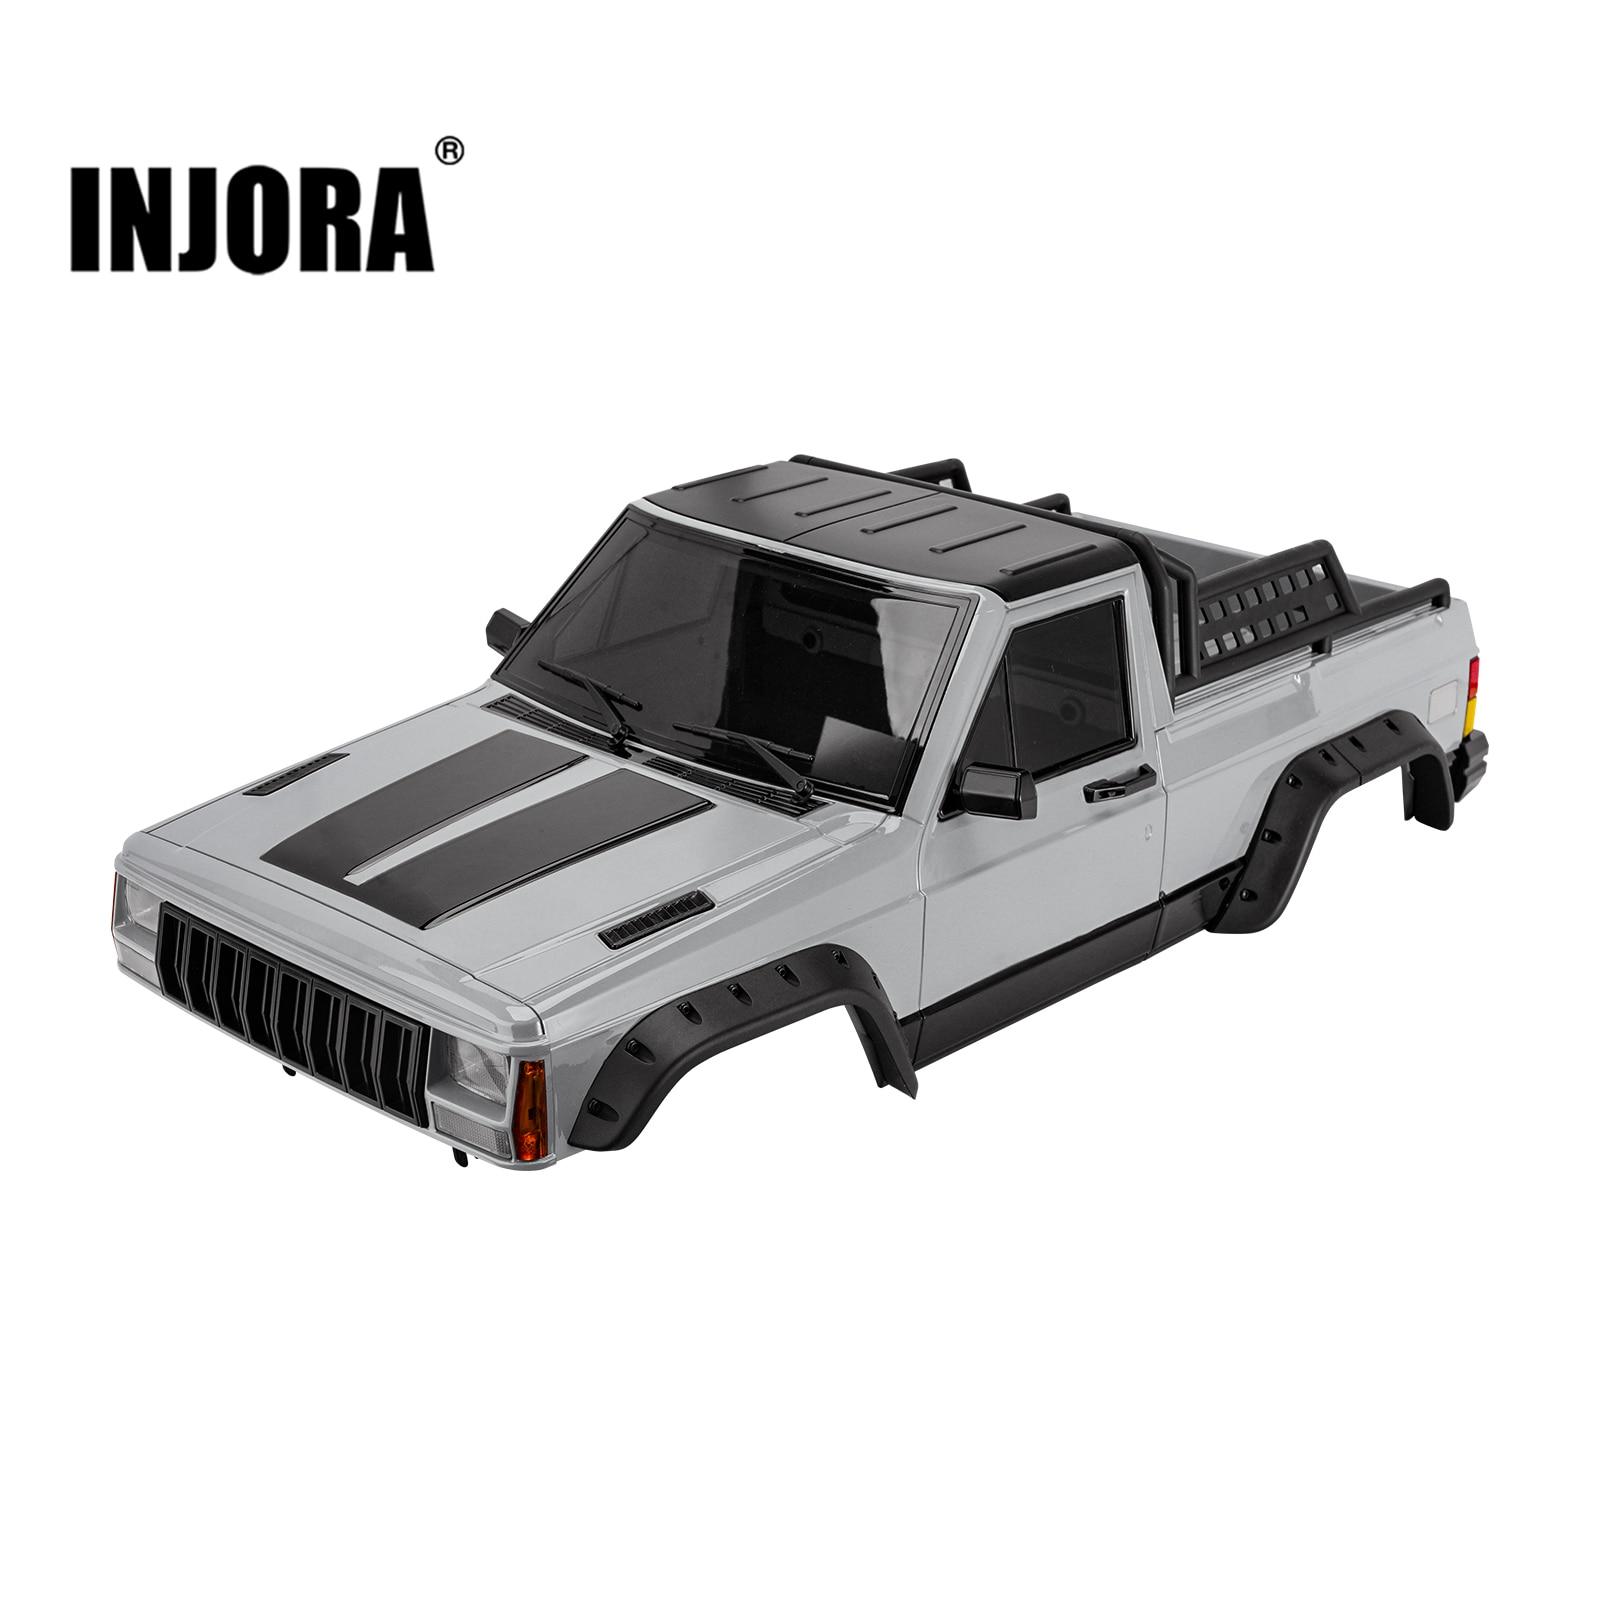 INJORA-Cherokee-Pickup-Truck-Body-Shell-Kit-313mm-Wheelbase-for-1-10-RC-Crawler-Car-Axial.jpg